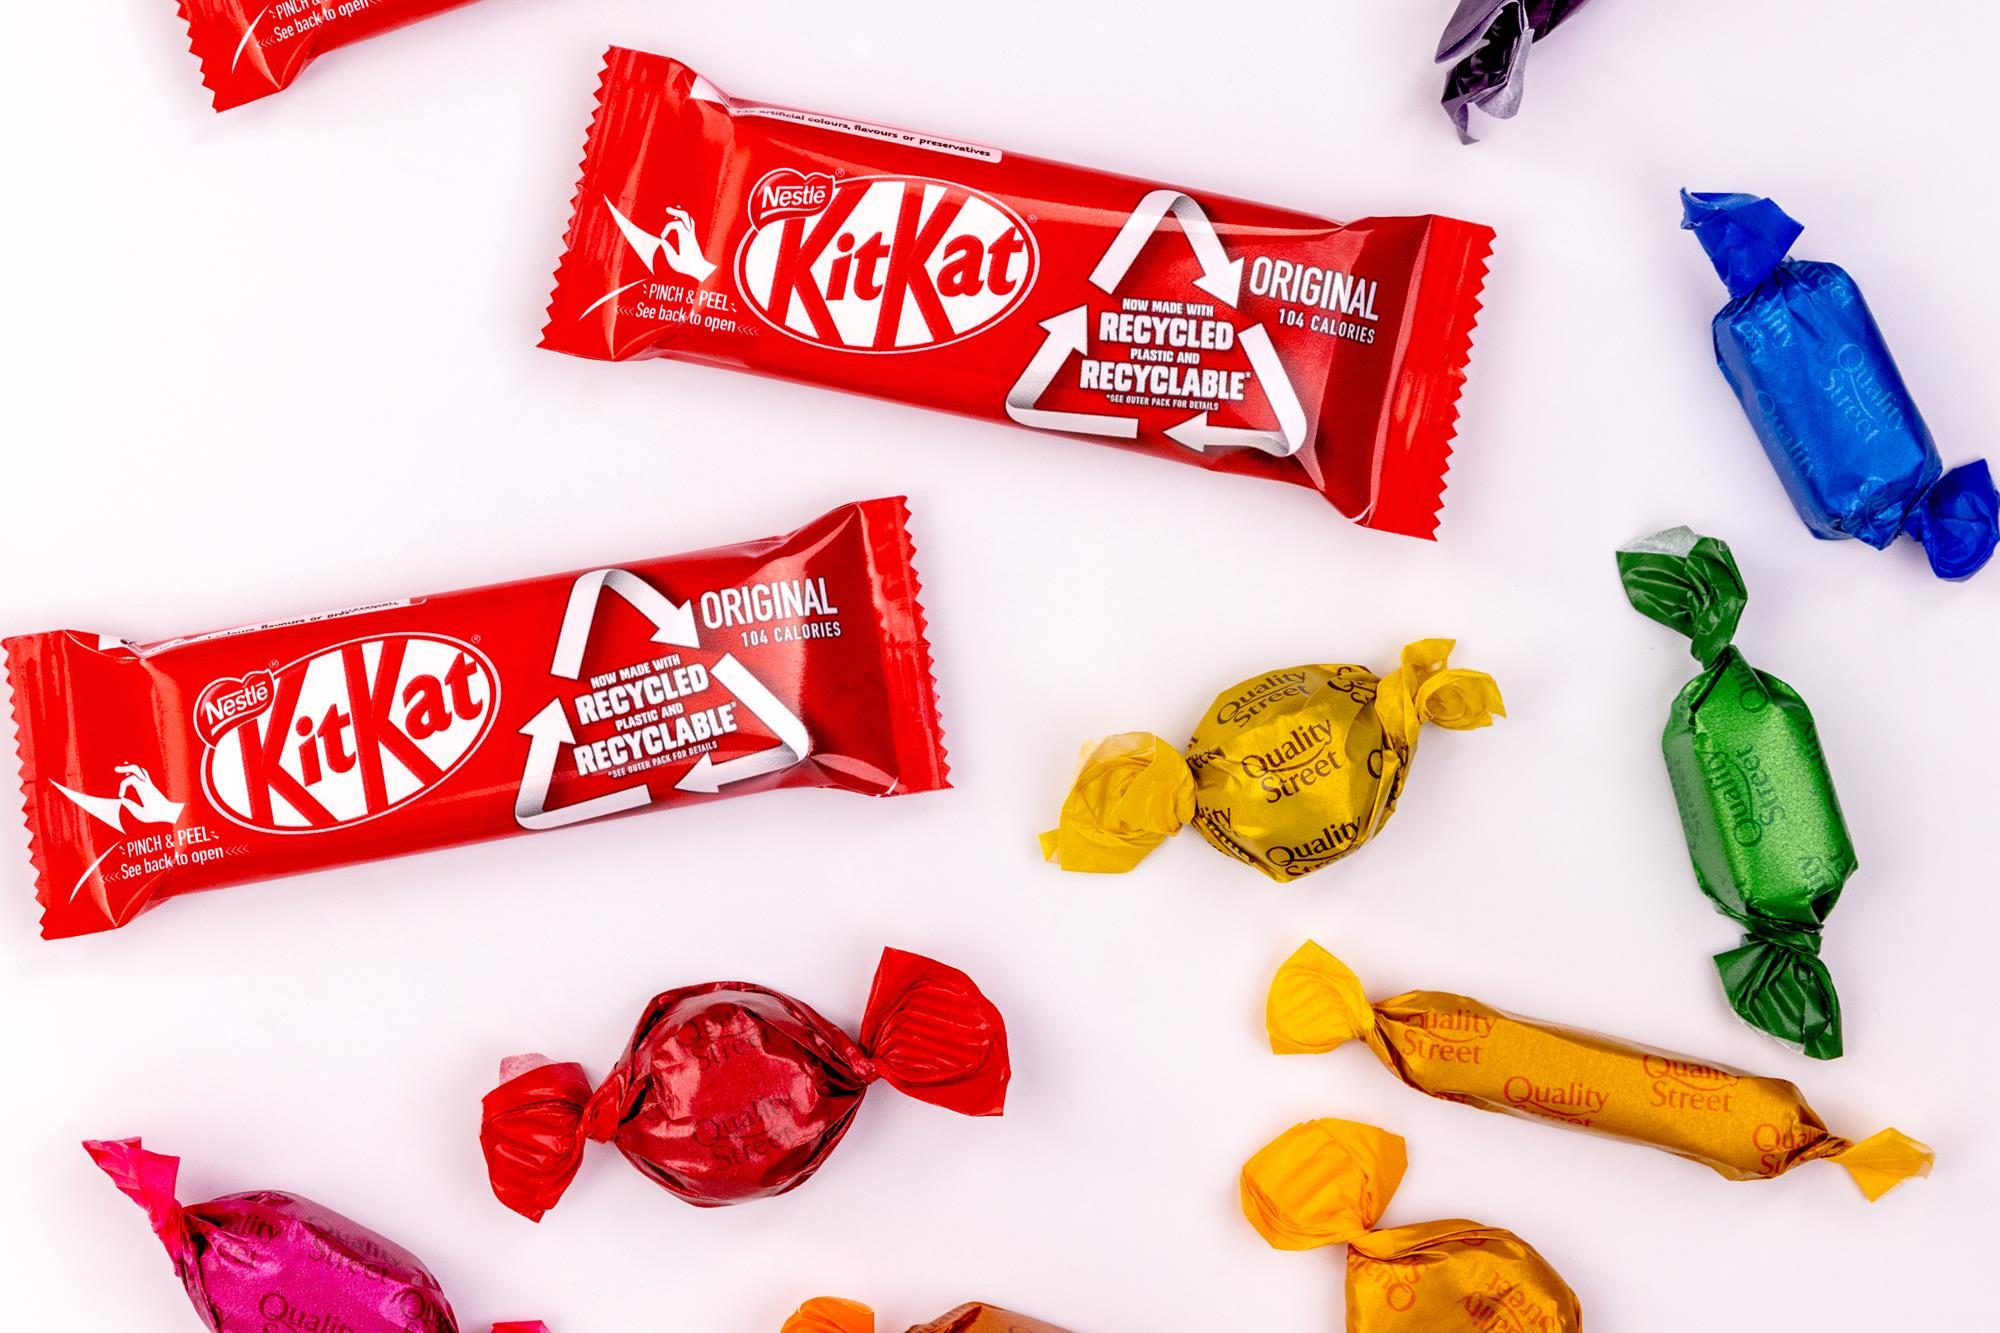 Nestlé scraps plastic packaging for Quality Street chocolates, News